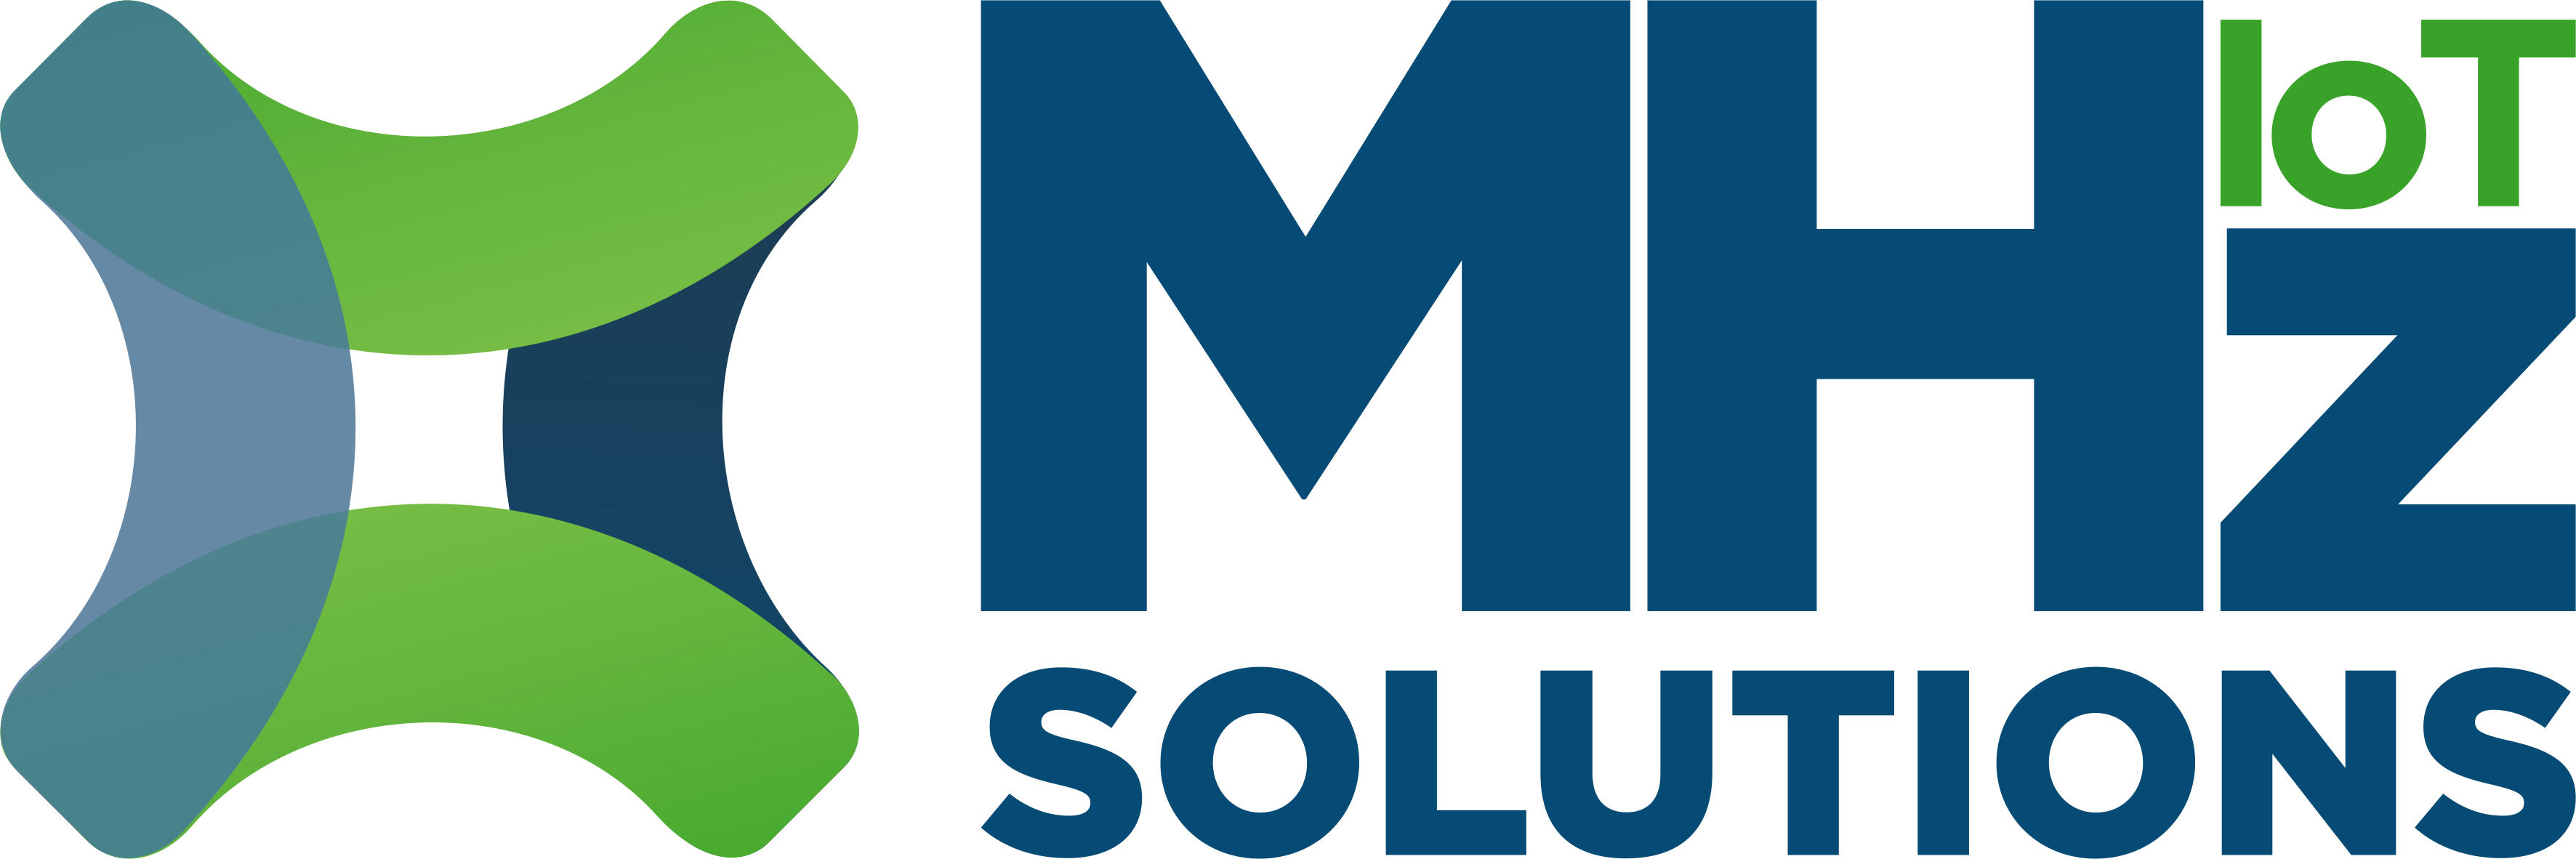 MegaHertz IoT Solutions